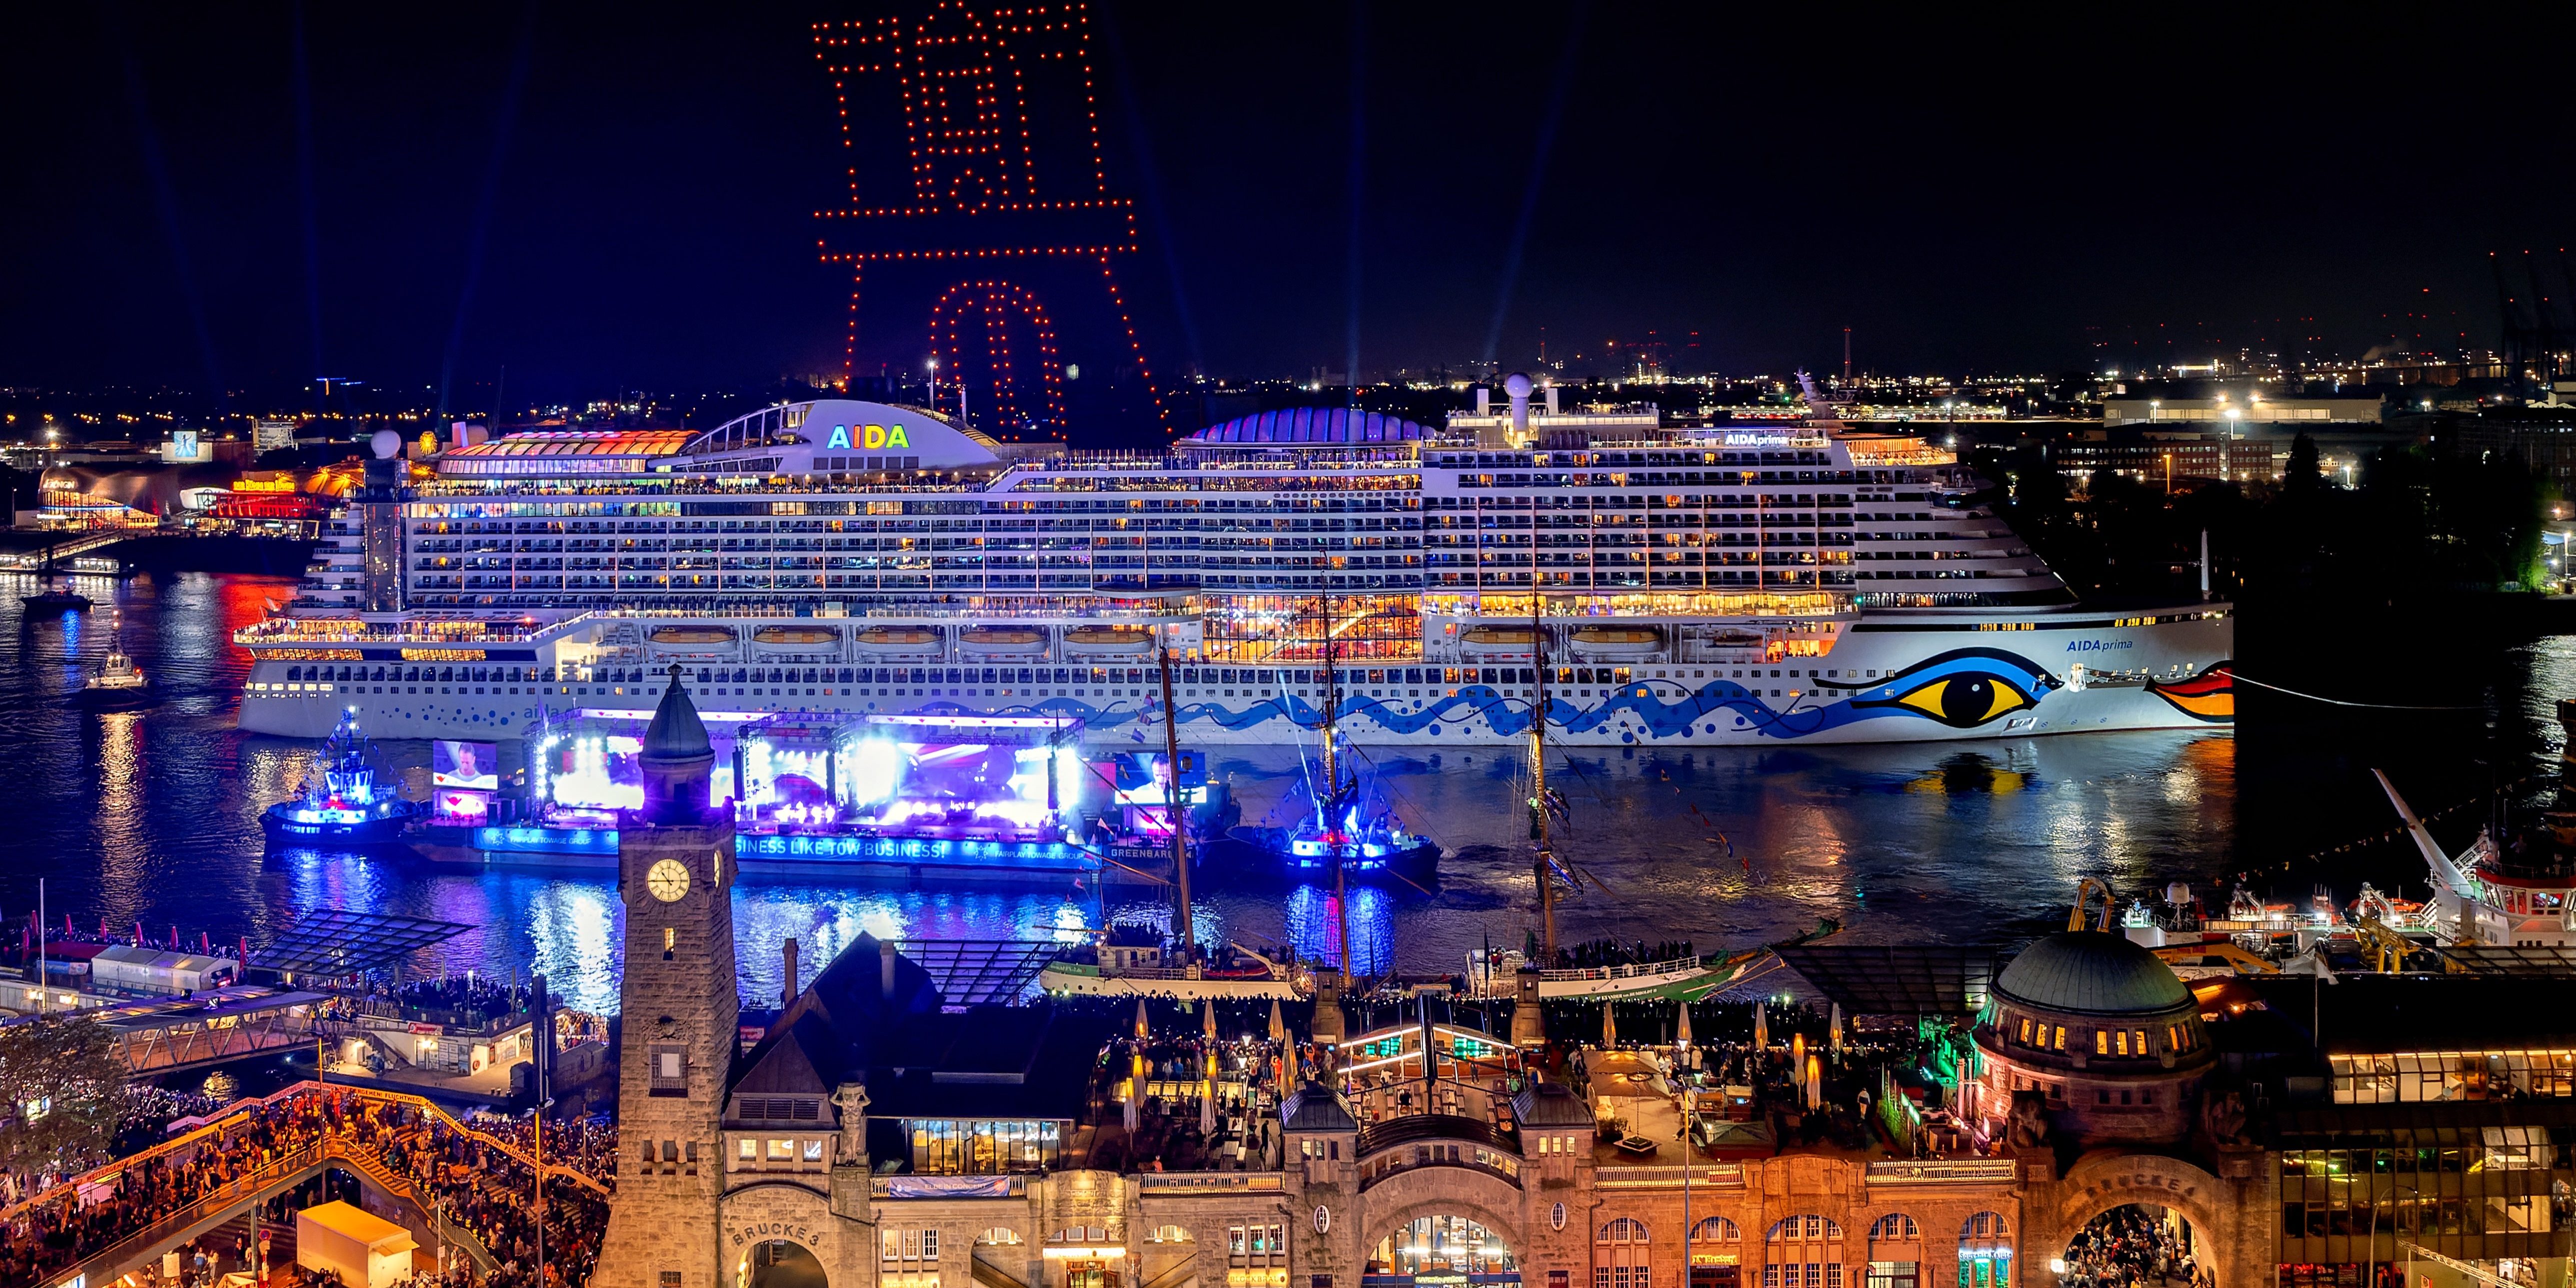 AIDAprima beim 835. Hamburger Hafengeburtstag. (Foto: Christian Lietzmann/AIDA Cruises)